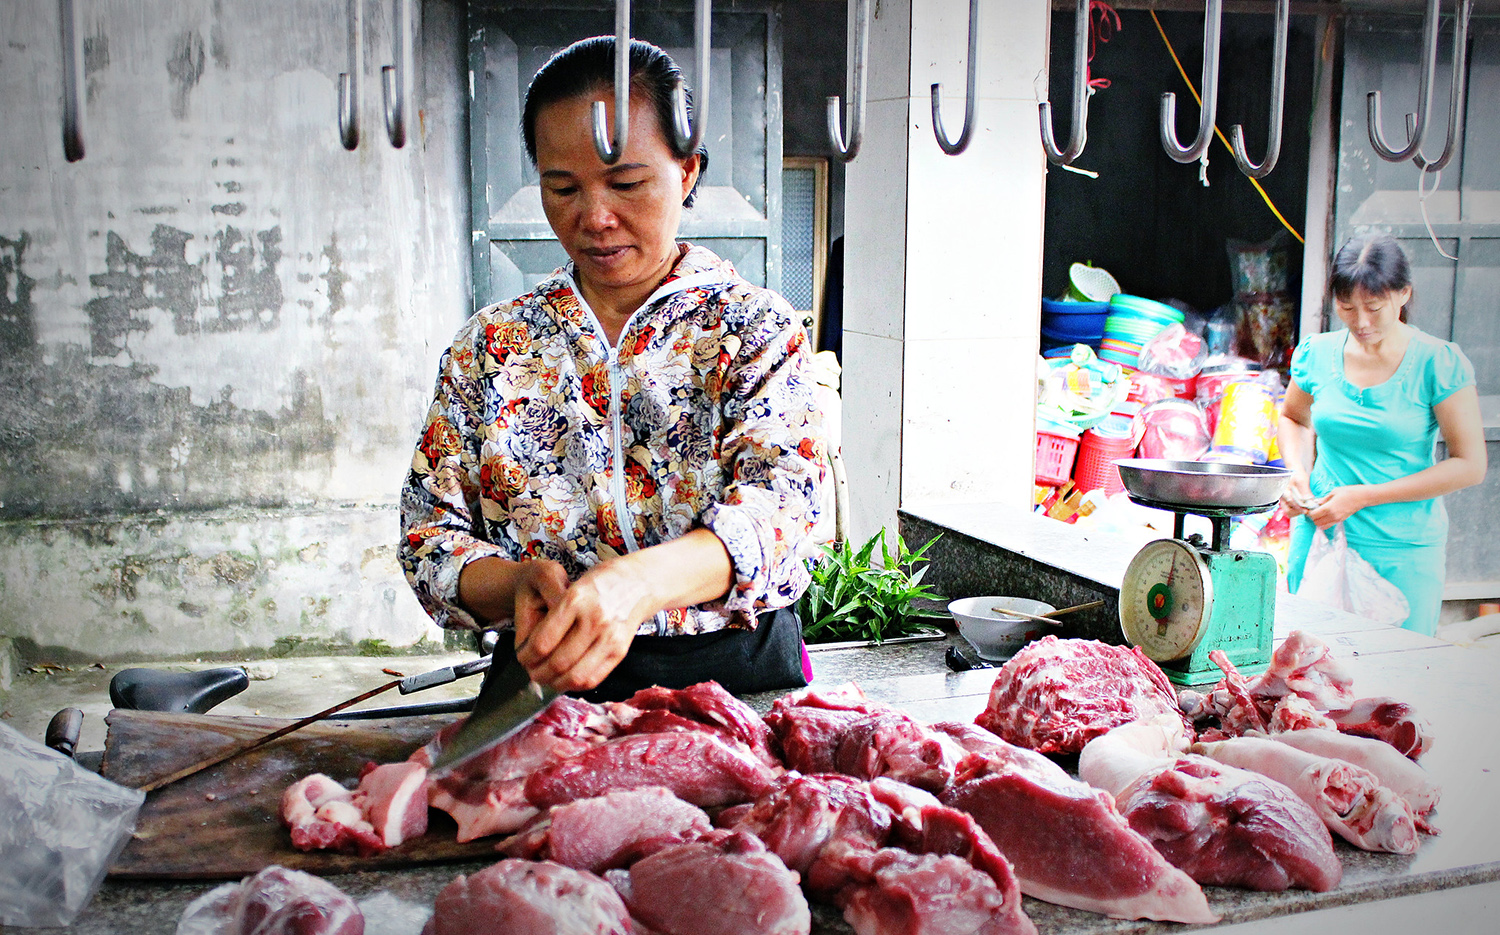 A woman chops meat in an open air market.